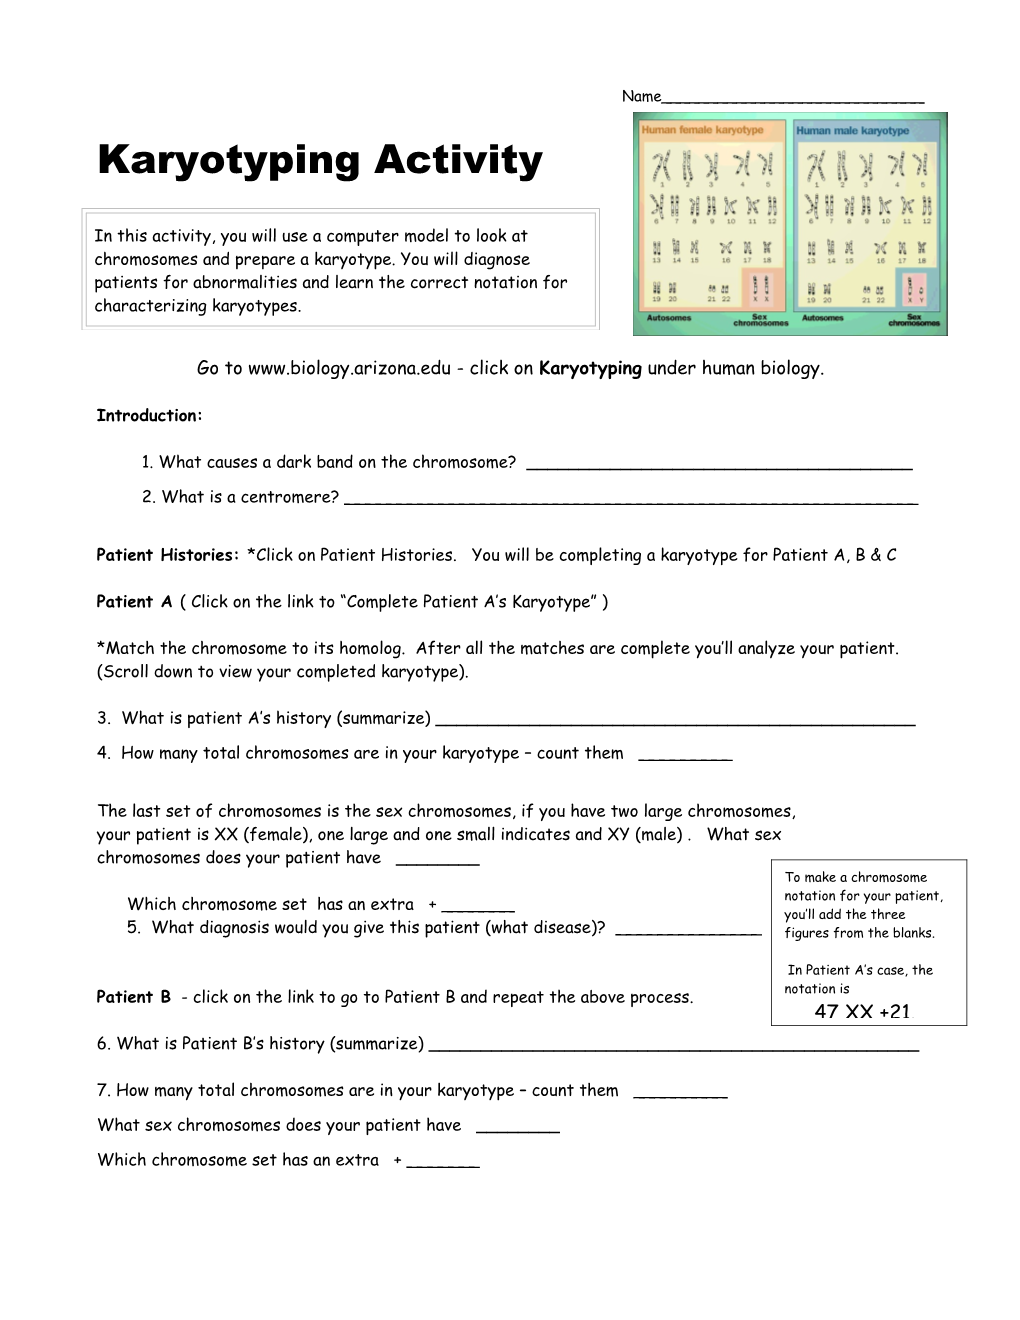 Karyotyping Activity